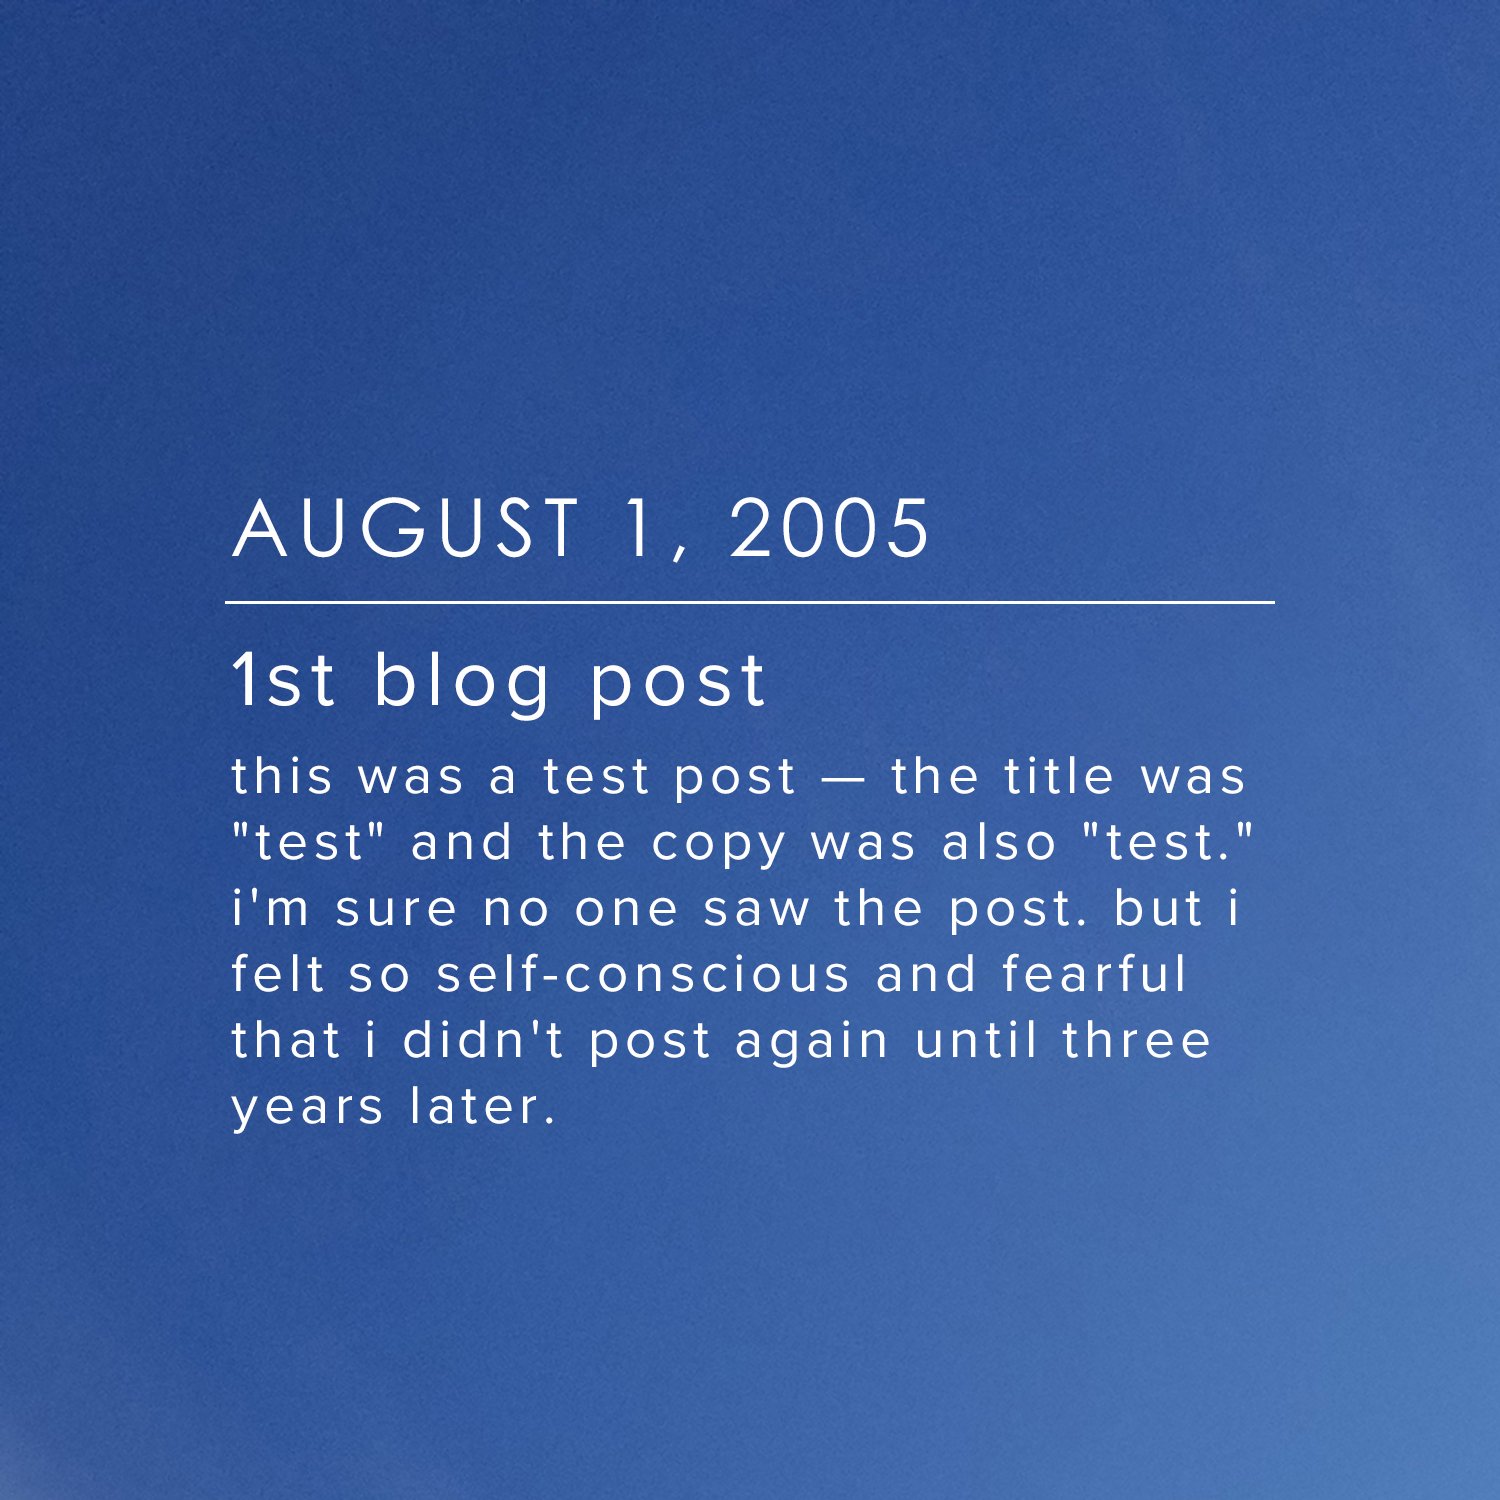 August 1, 2005 - 1st blog post